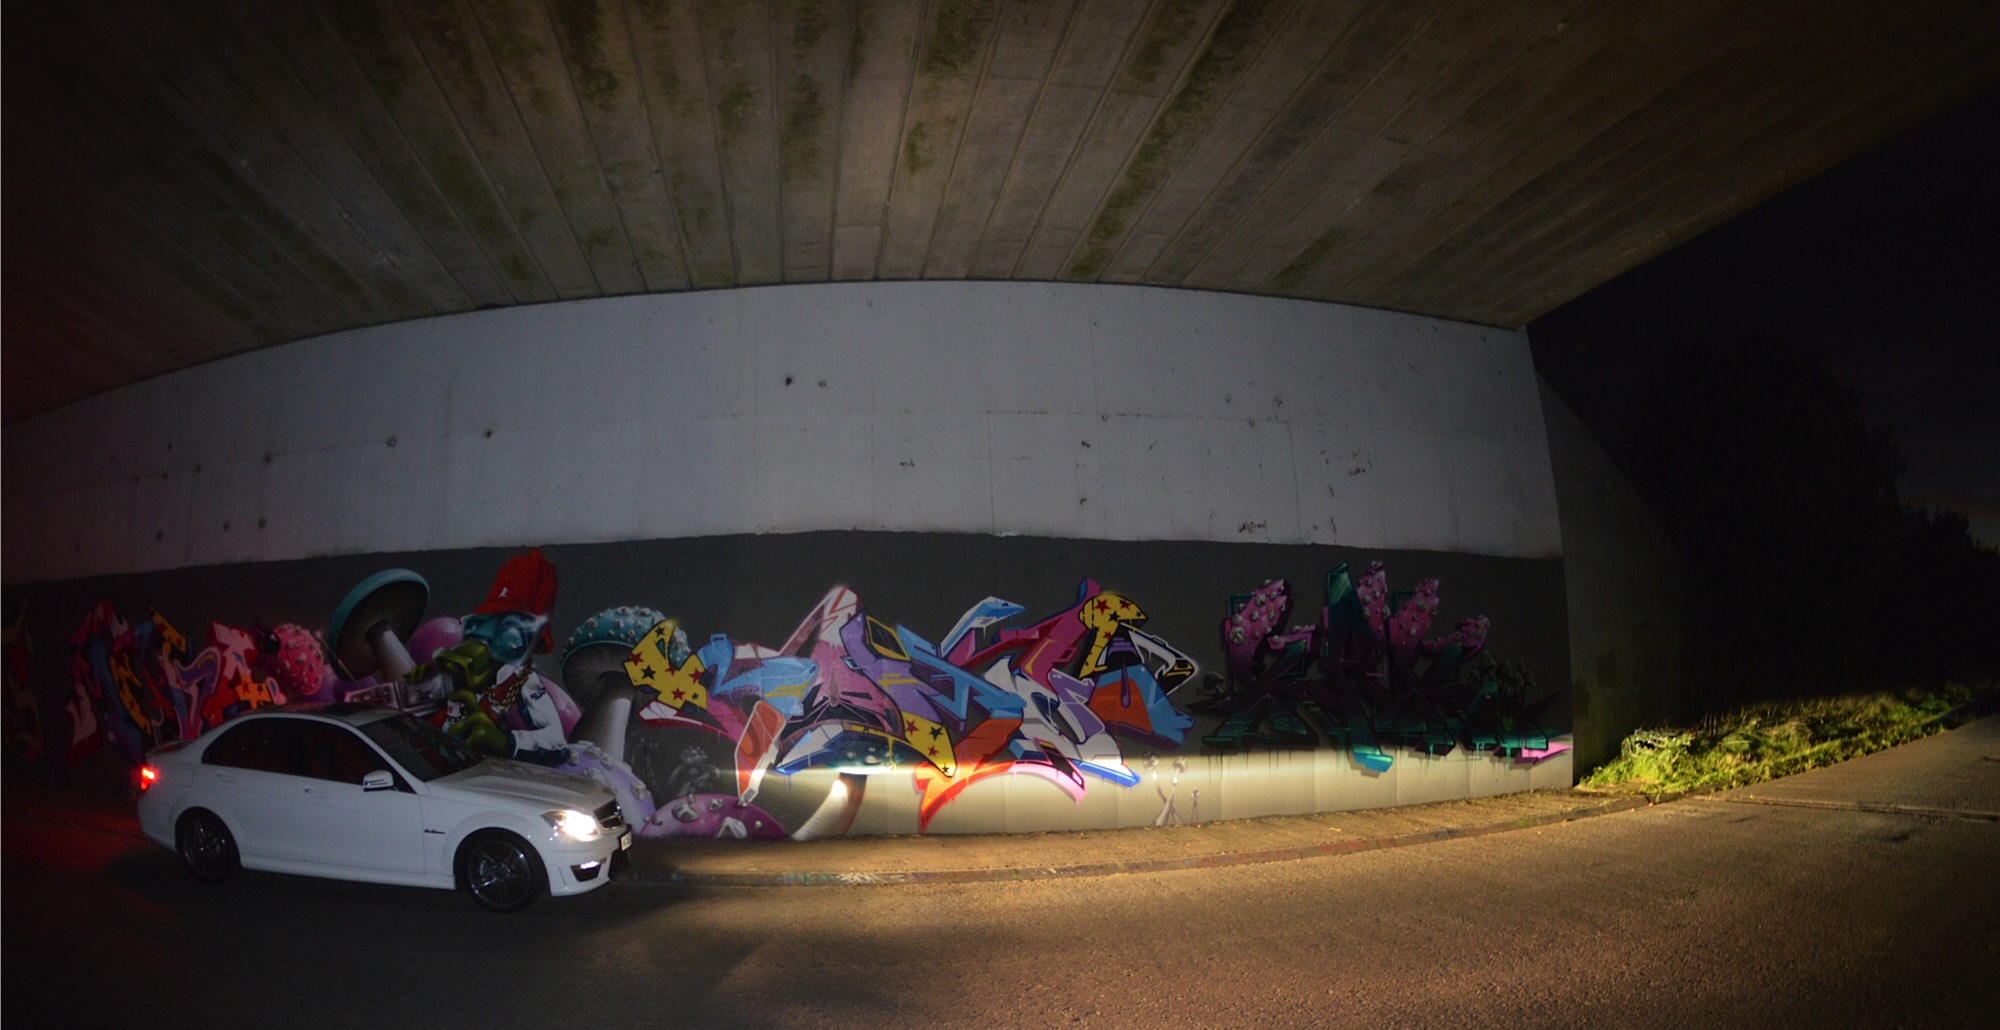 St Neots graffiti wall - a great photo location - Page 9 - Herts, Beds, Bucks & Cambs - PistonHeads